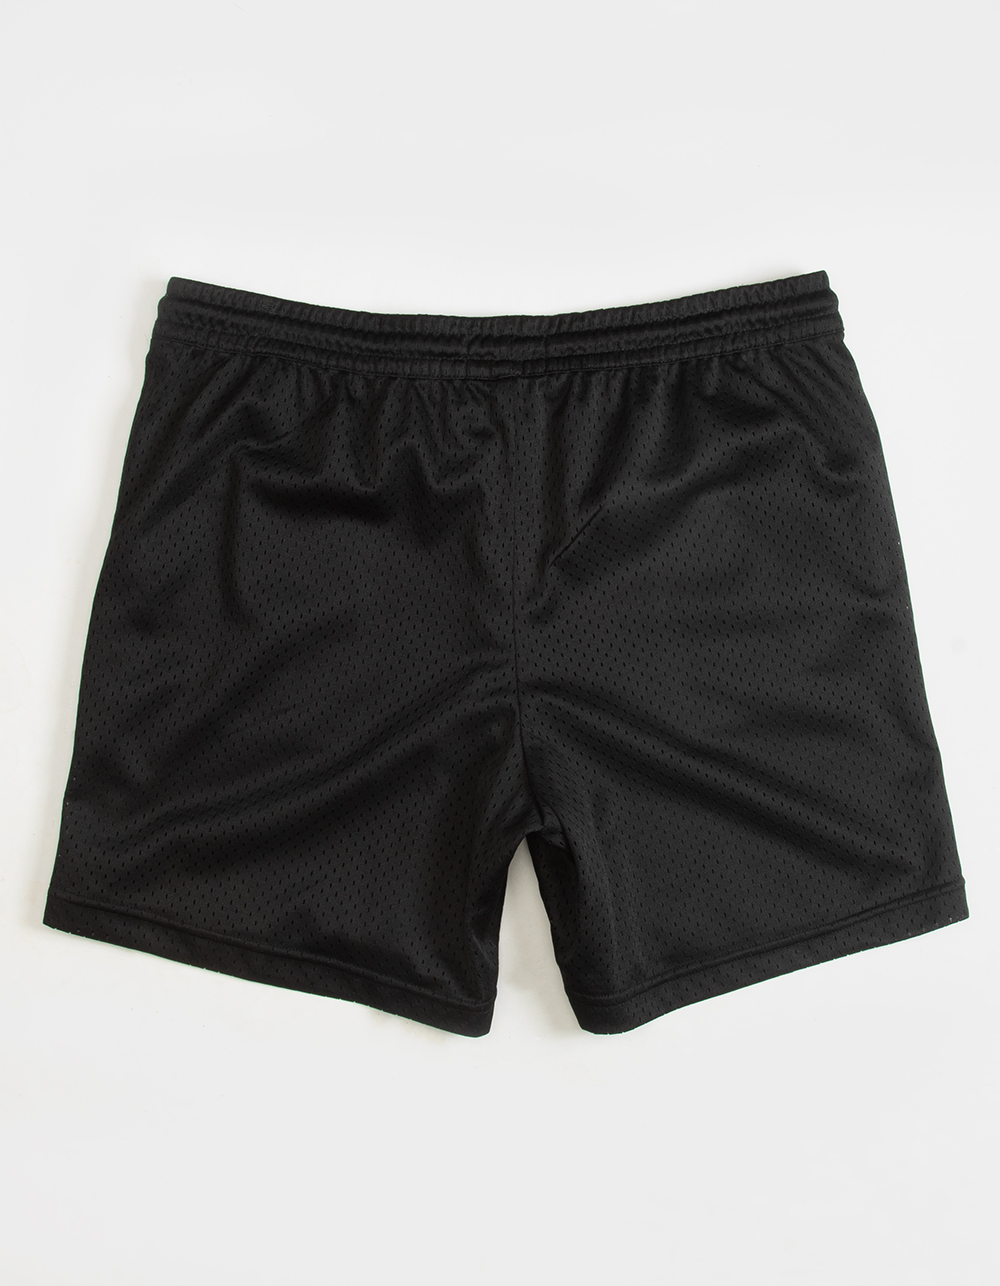 Rsq 5 Mesh Shorts - Black - Small